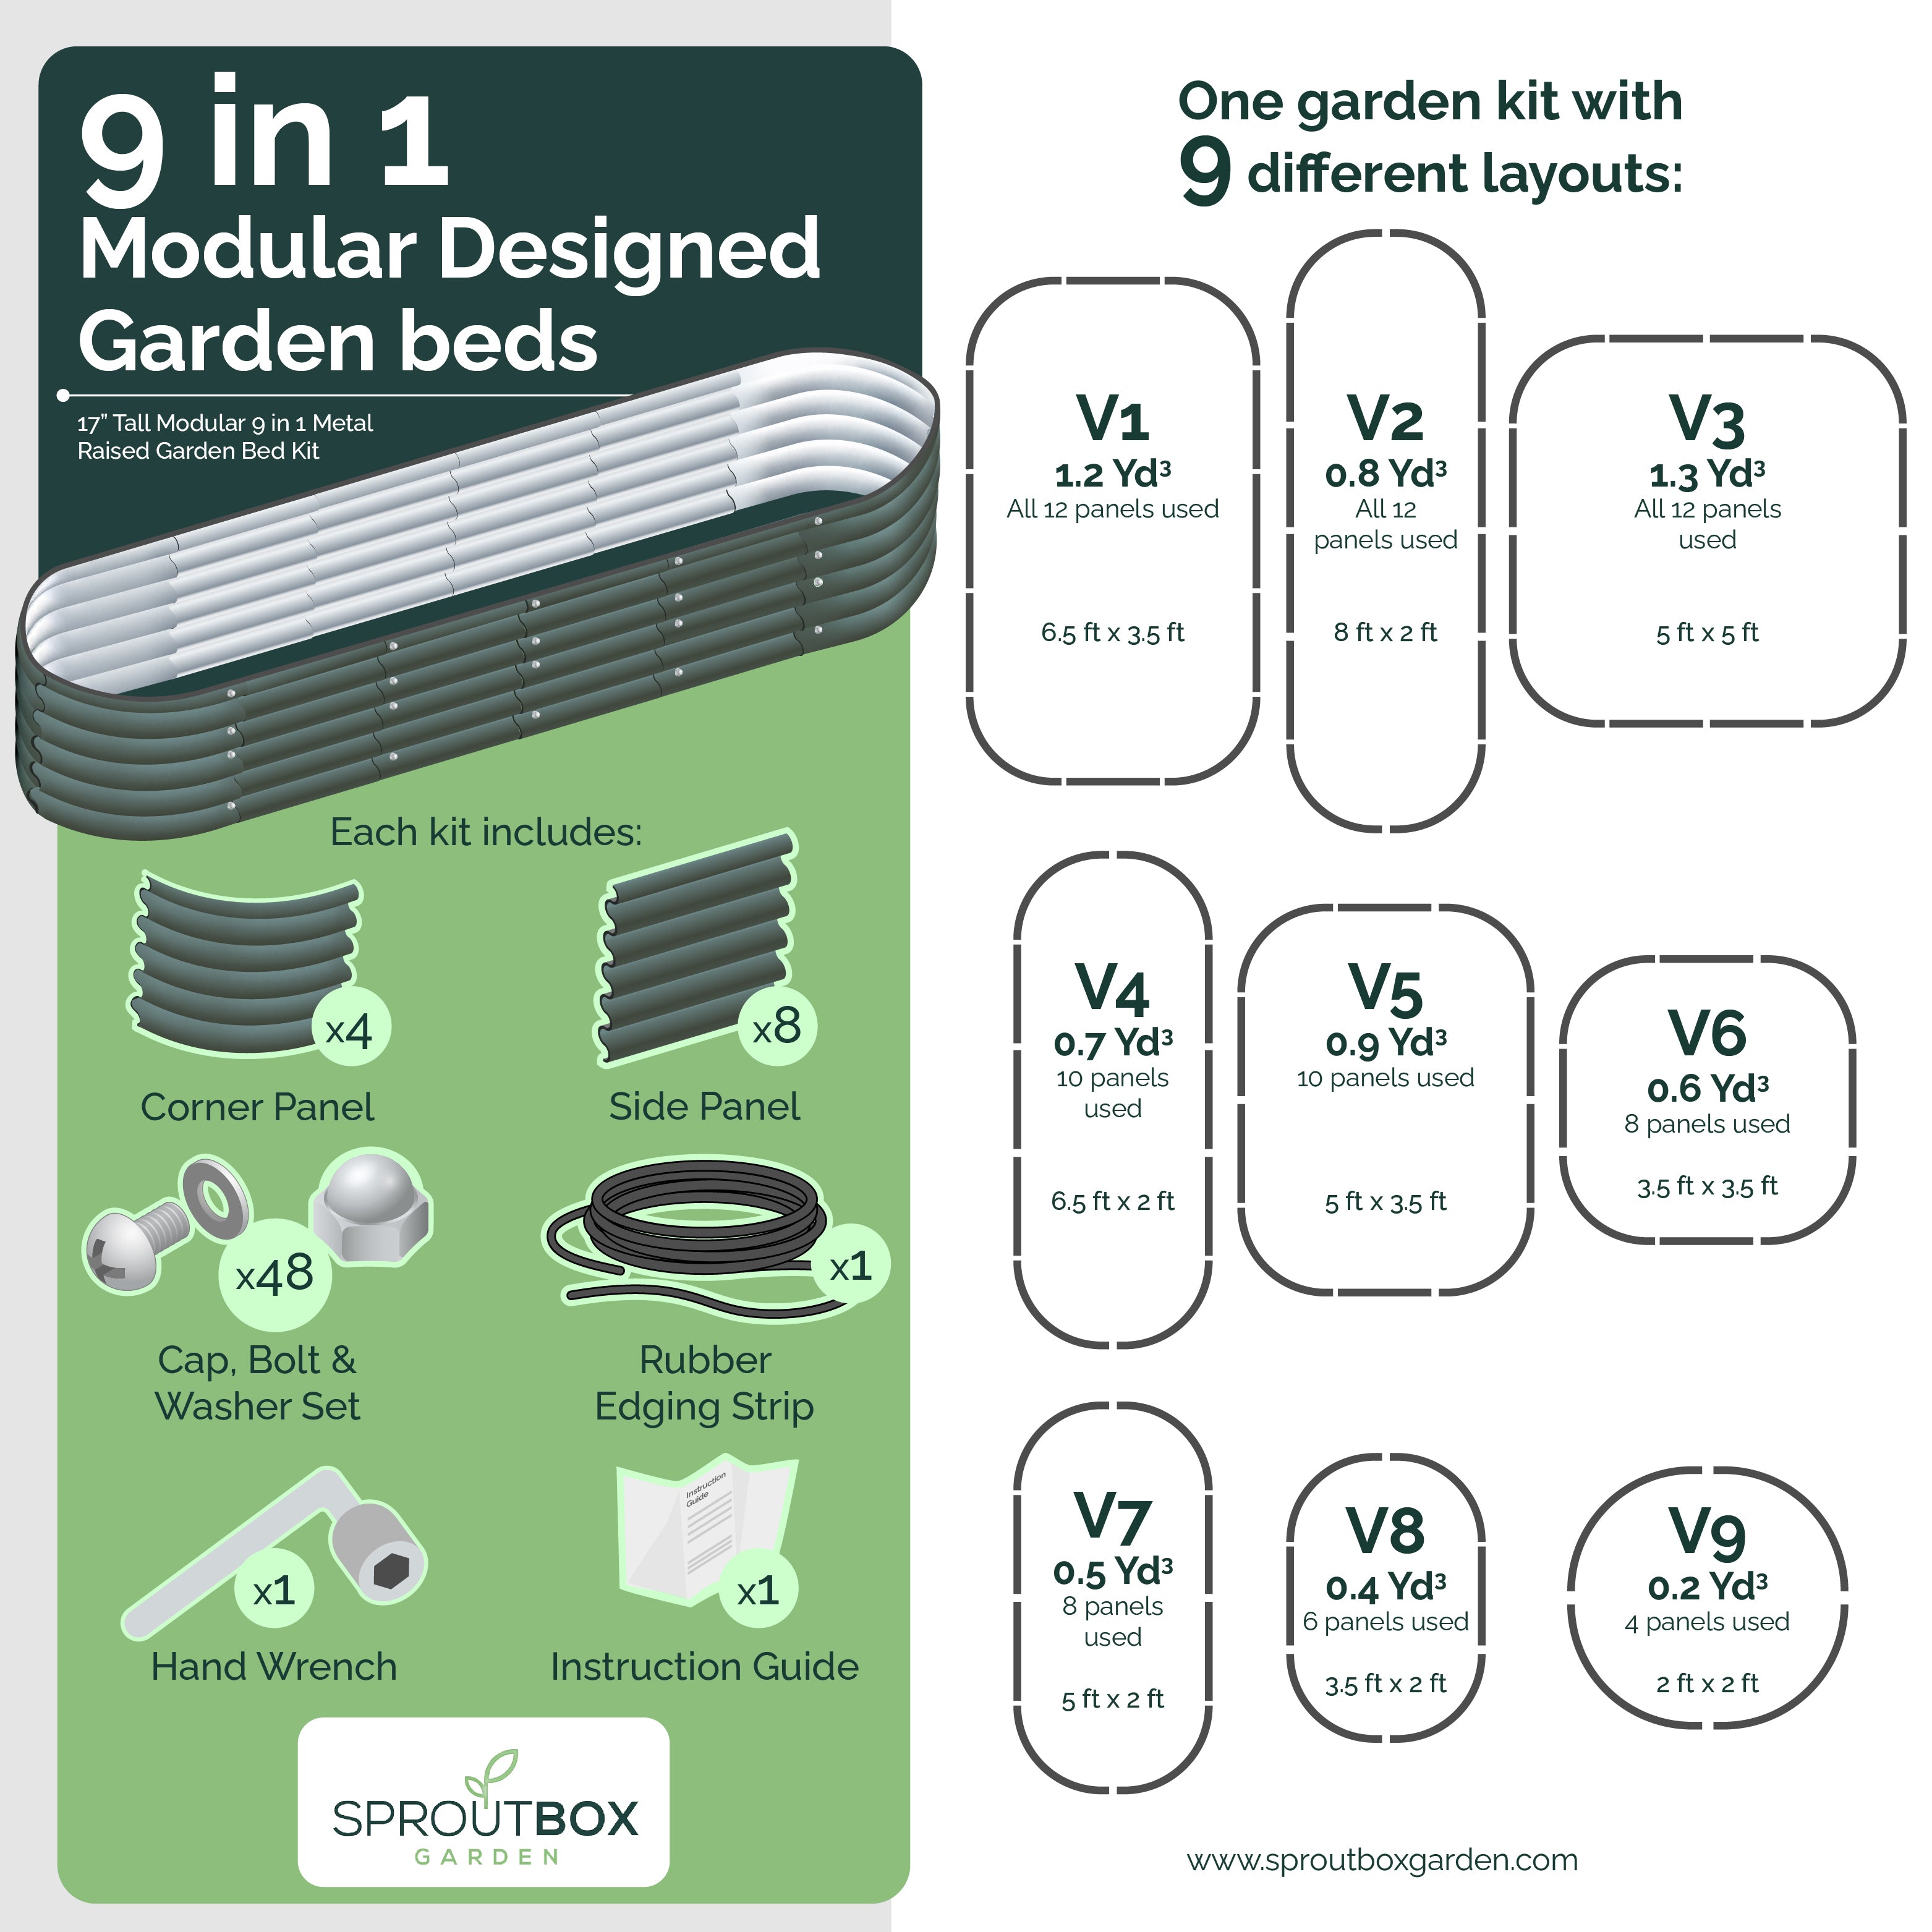 17 Tall 10 in 1 Modular Metal Raised Garden Bed Kit